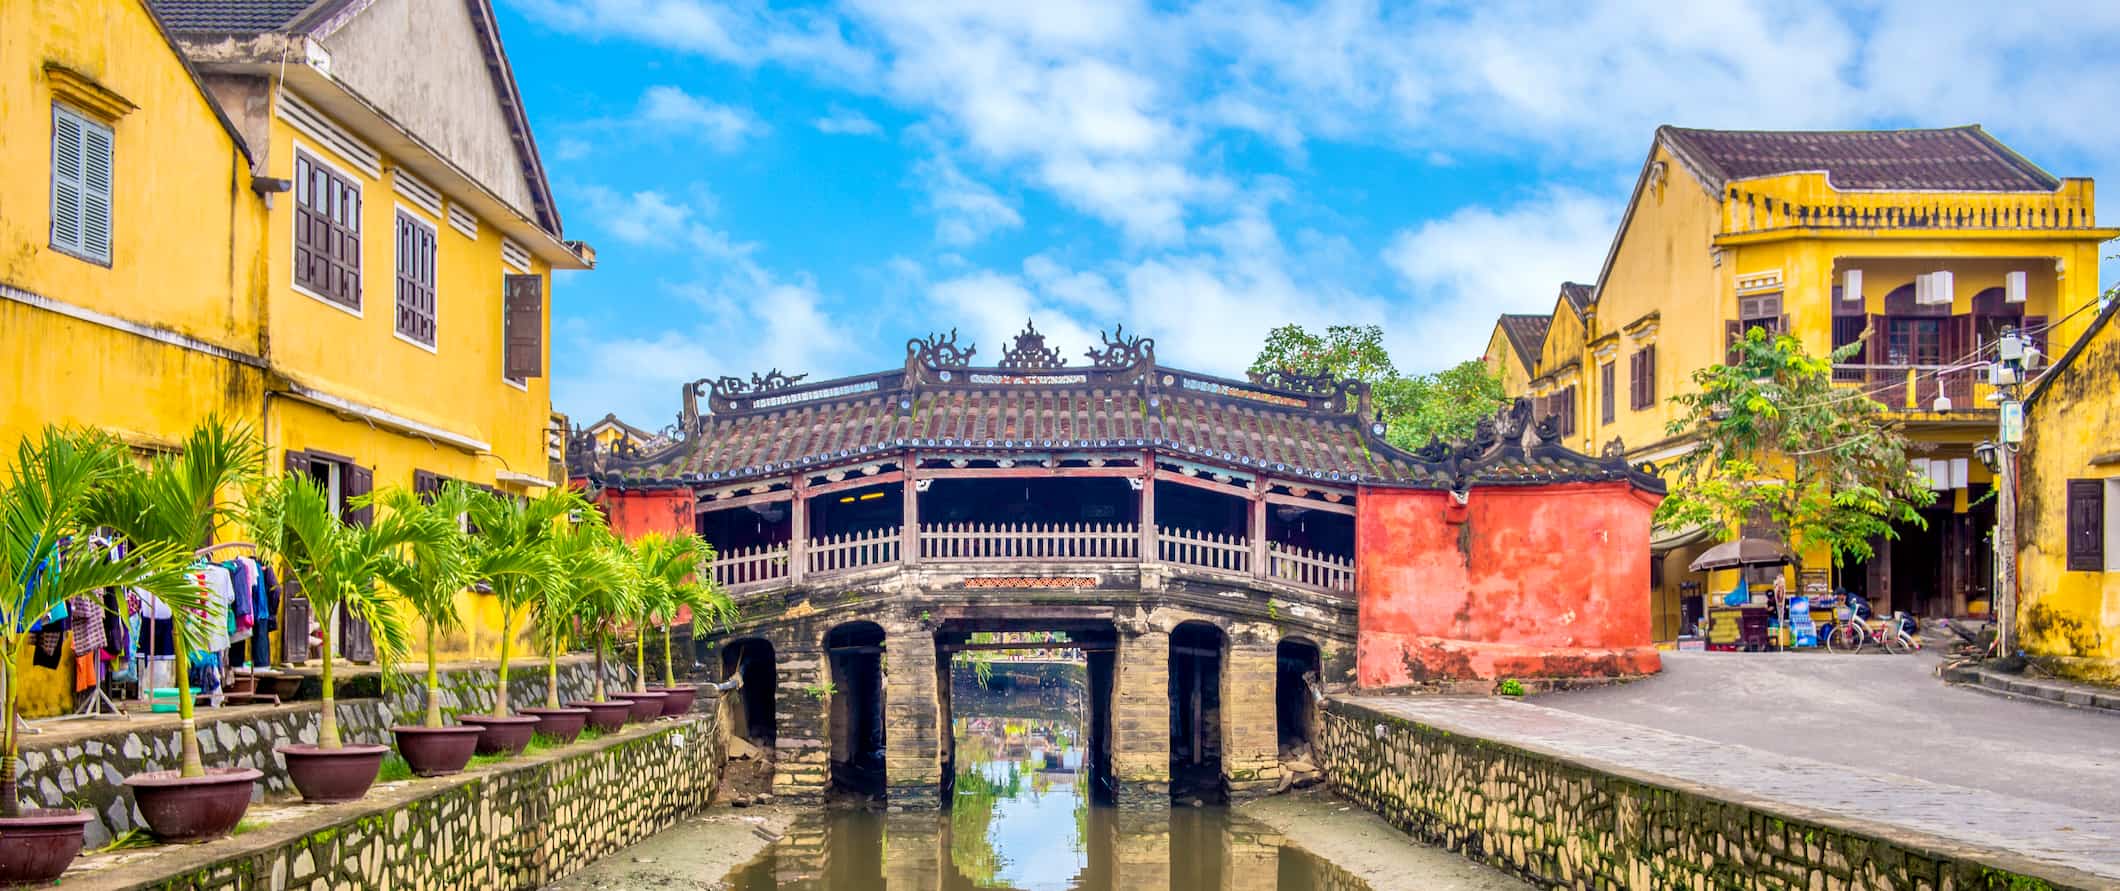 The famous historic Japanese bridge in beautiful Hoi An, Vietnam